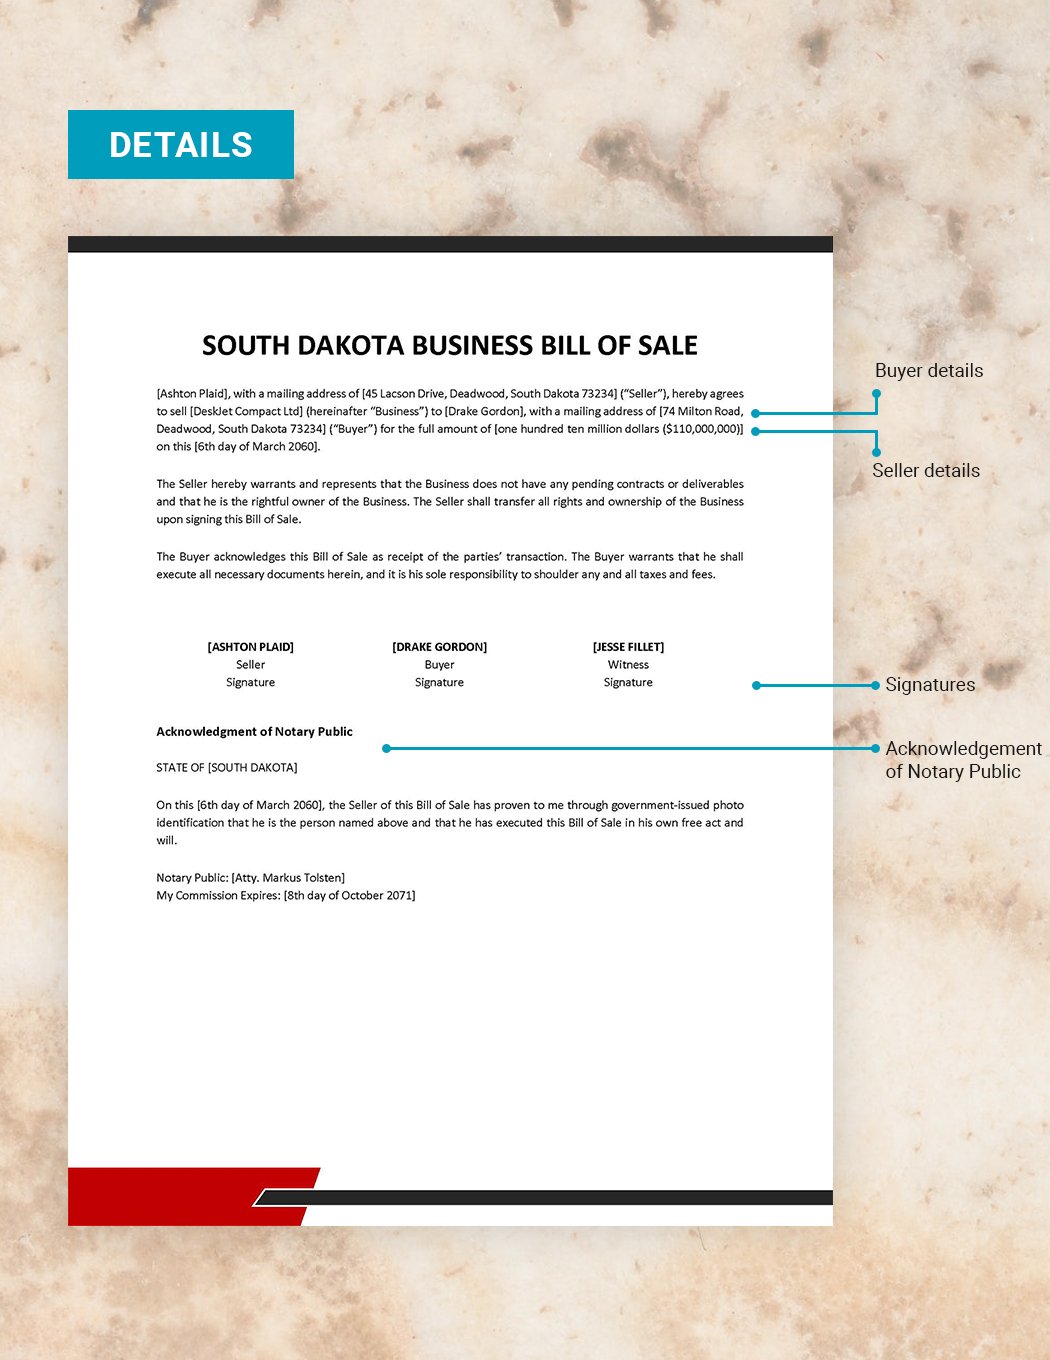 South Dakota Business Bill of Sale Template